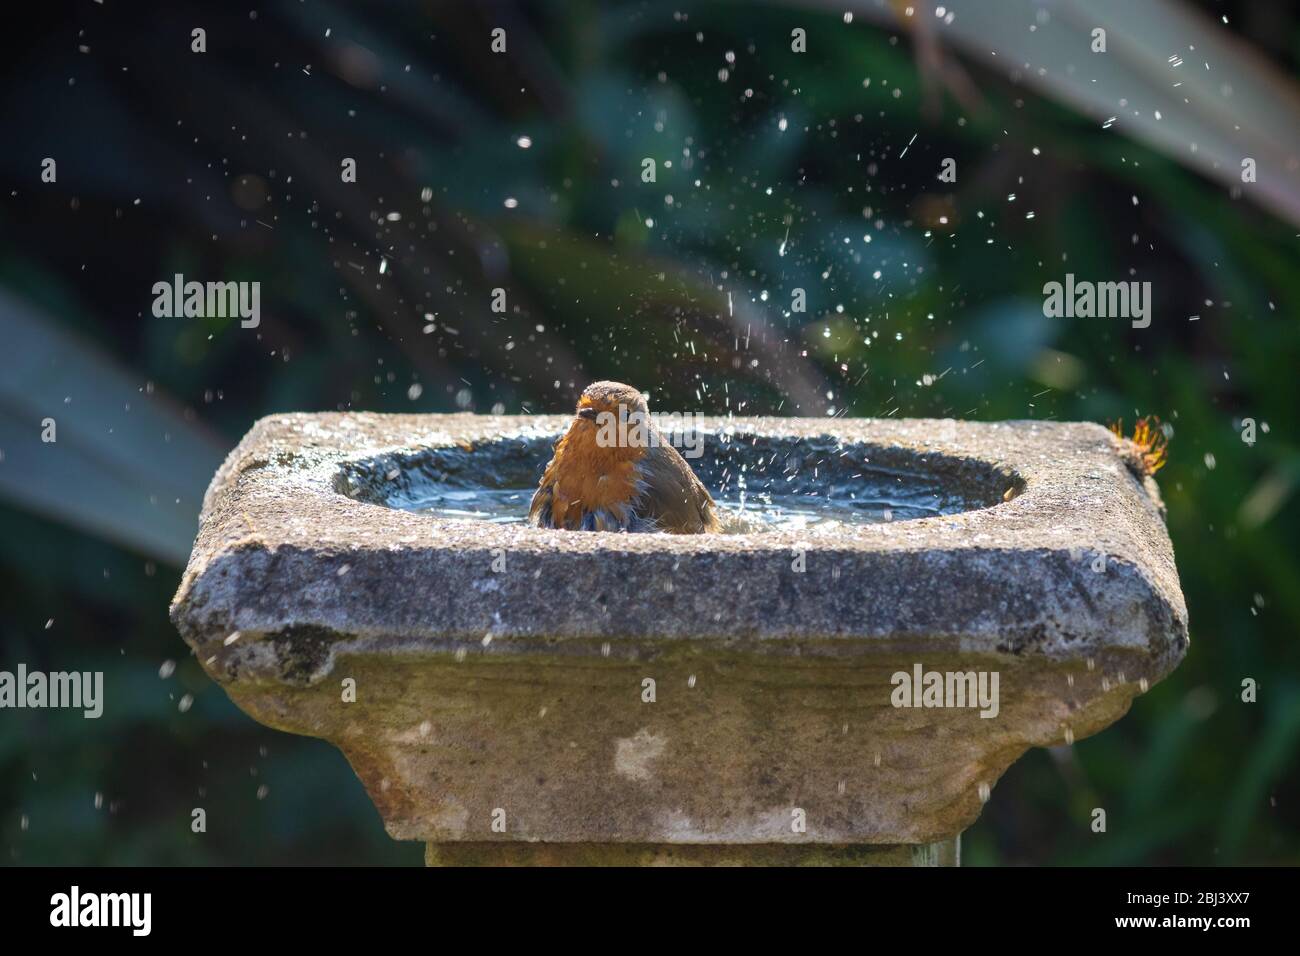 A single European robin (Erithacus rubecula) splashing about in a birdbath, Fife, Scotland. Stock Photo